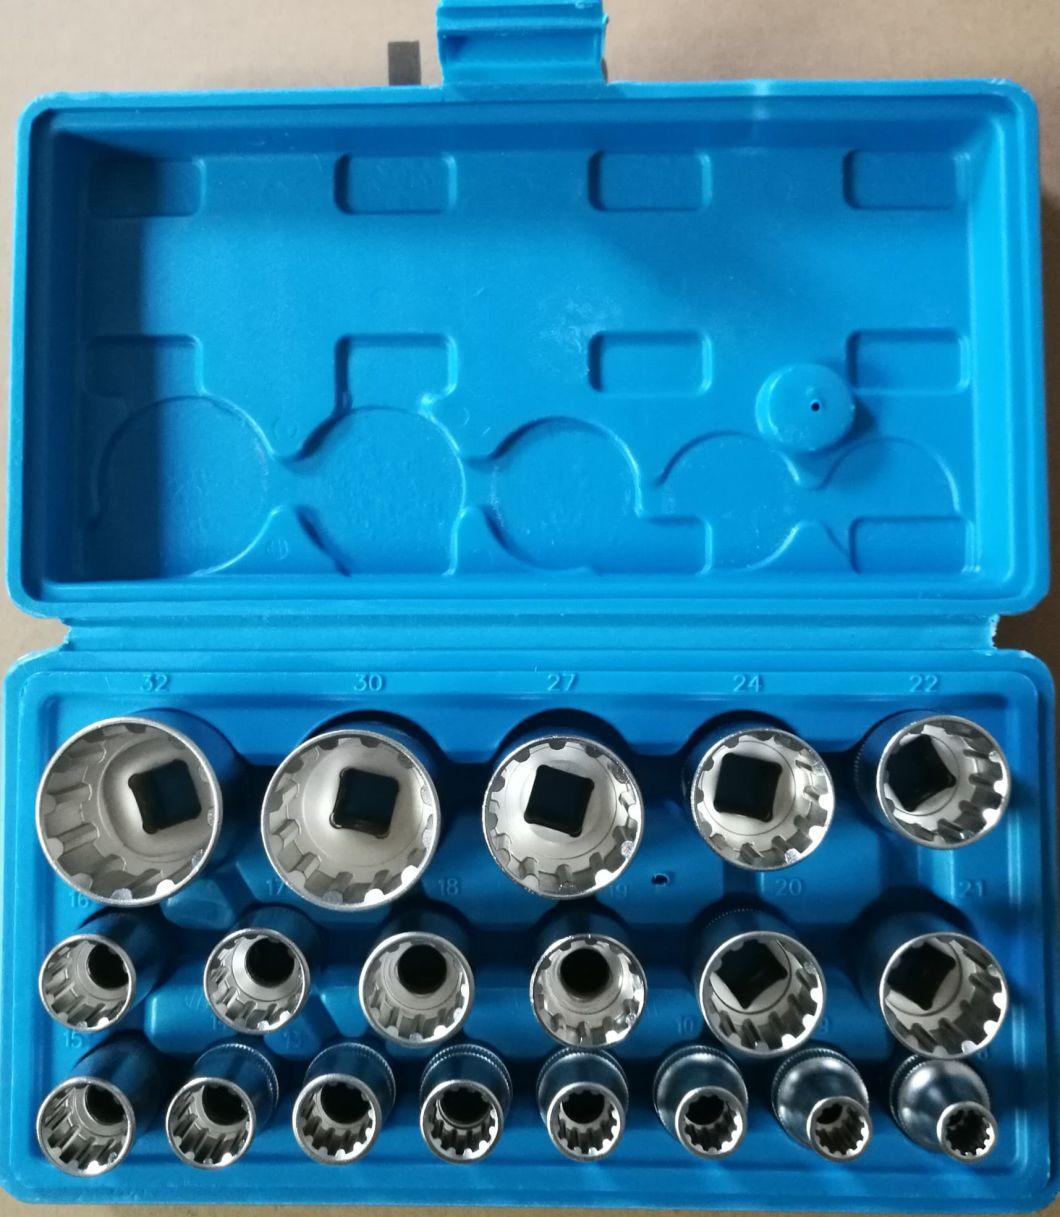 19PCS 1/2"Dr Teeth and Gear Socket Set (FY1719B-1)